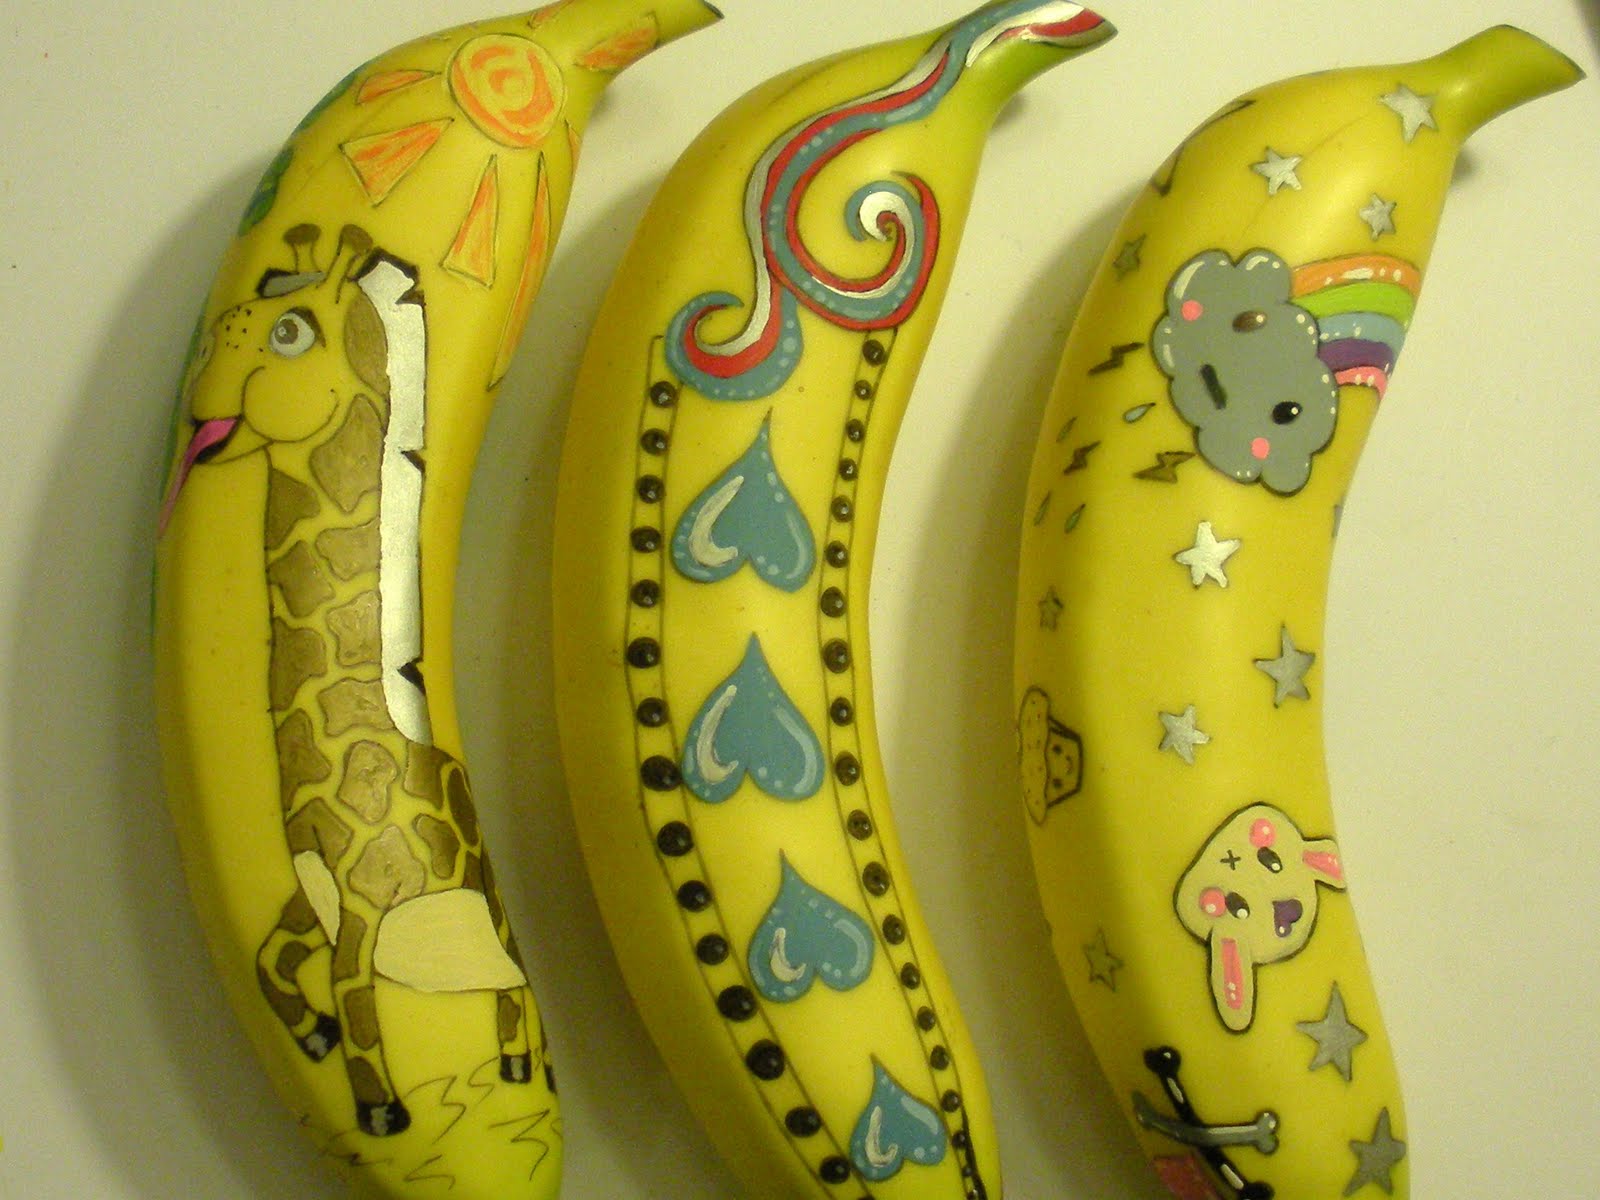 Ah, Banana Art Now we're talking